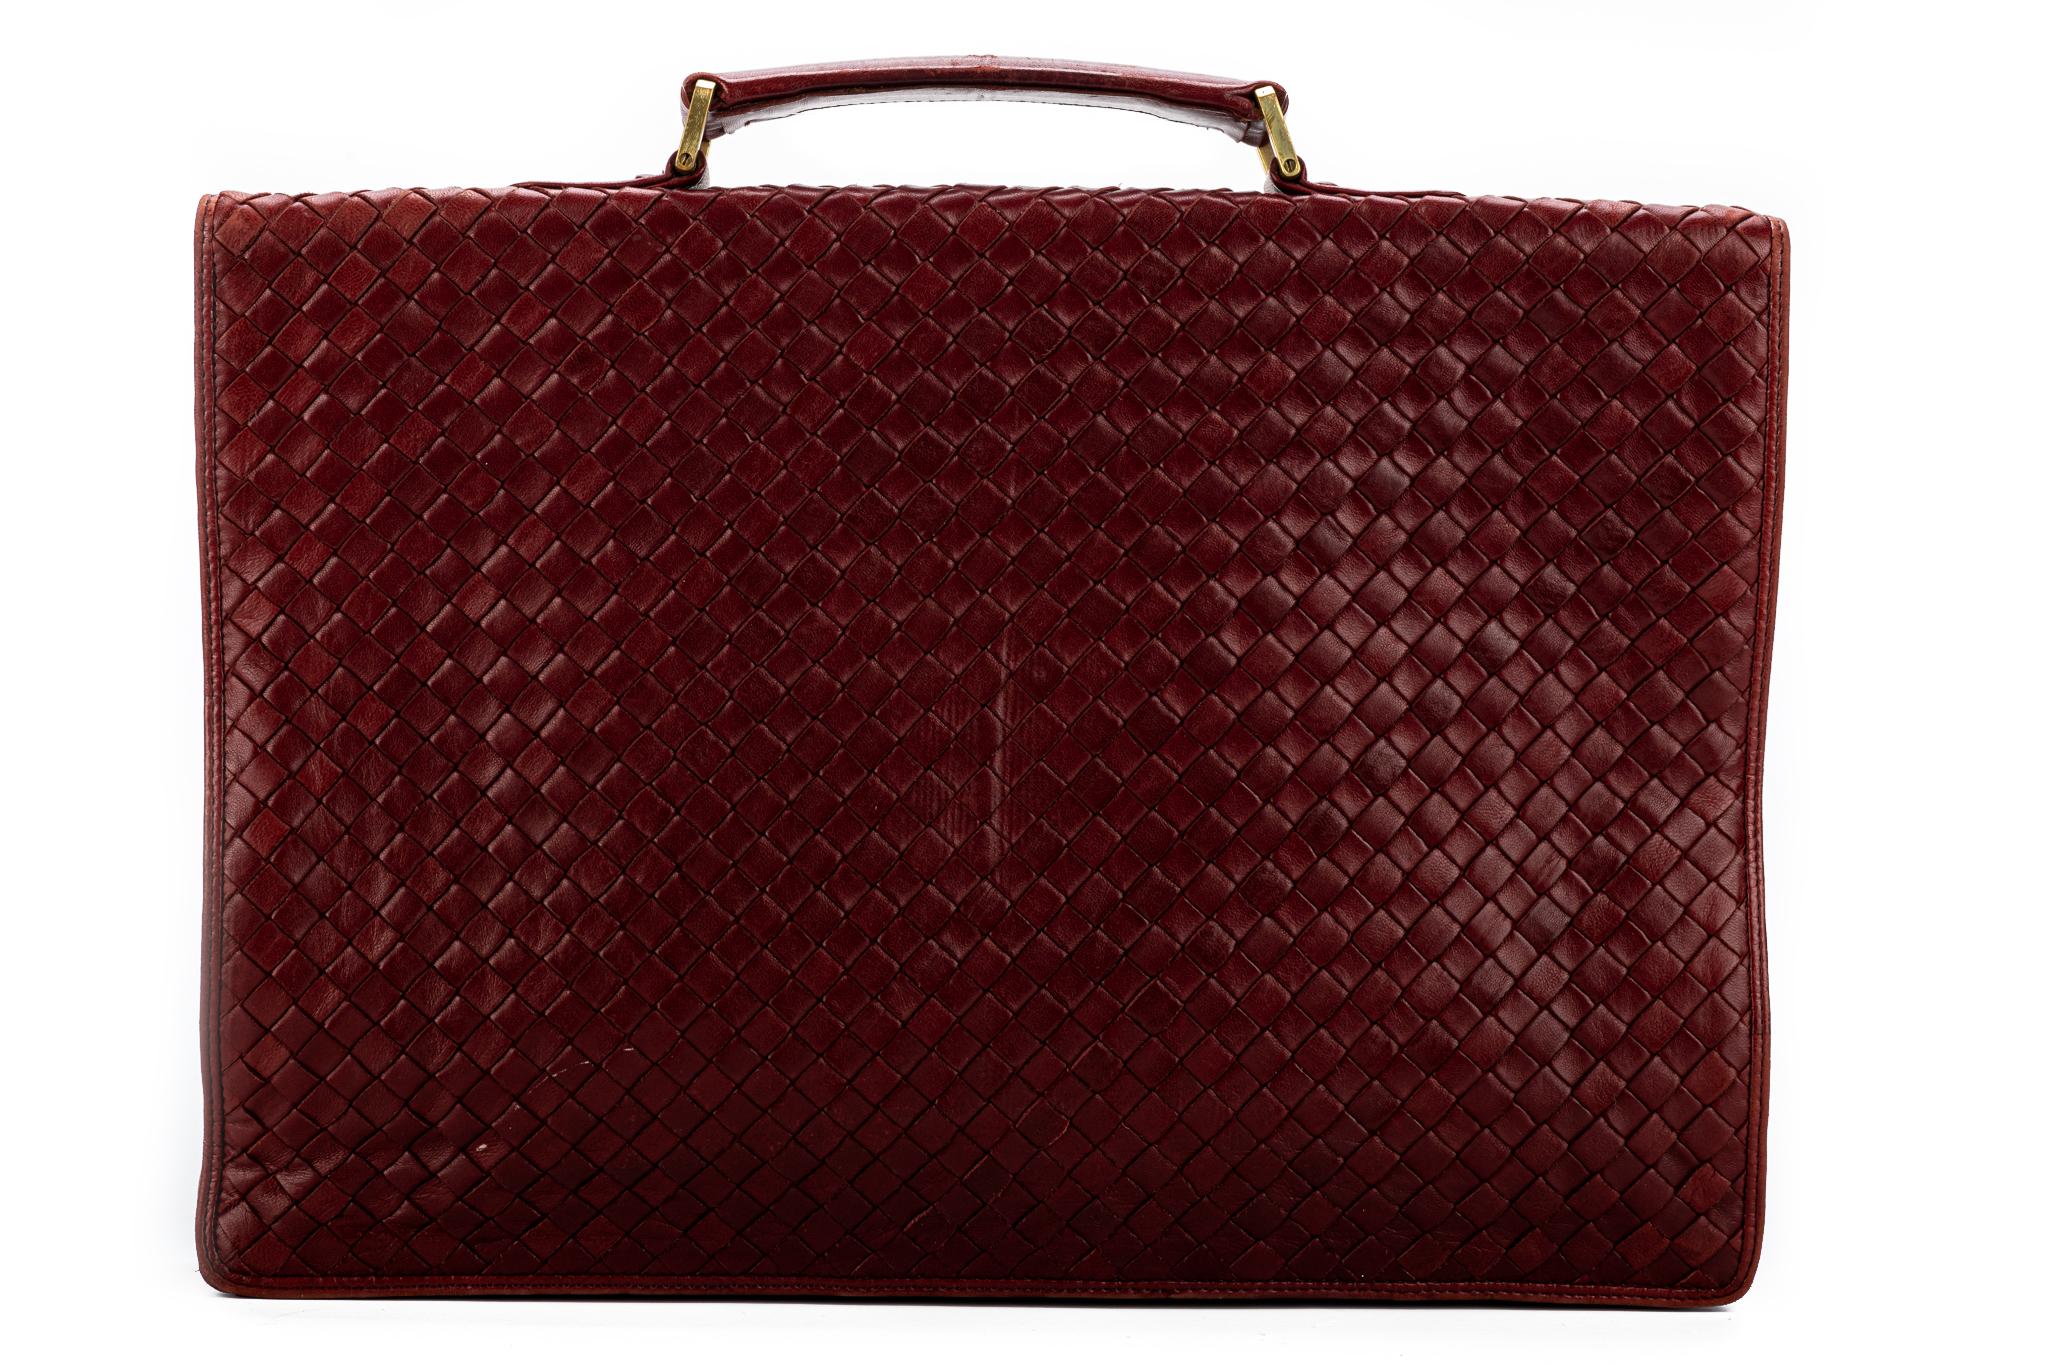 Used Briefcase NO brand shown,18x13x4.5 Leather in&out dark Burgundy w/warra 